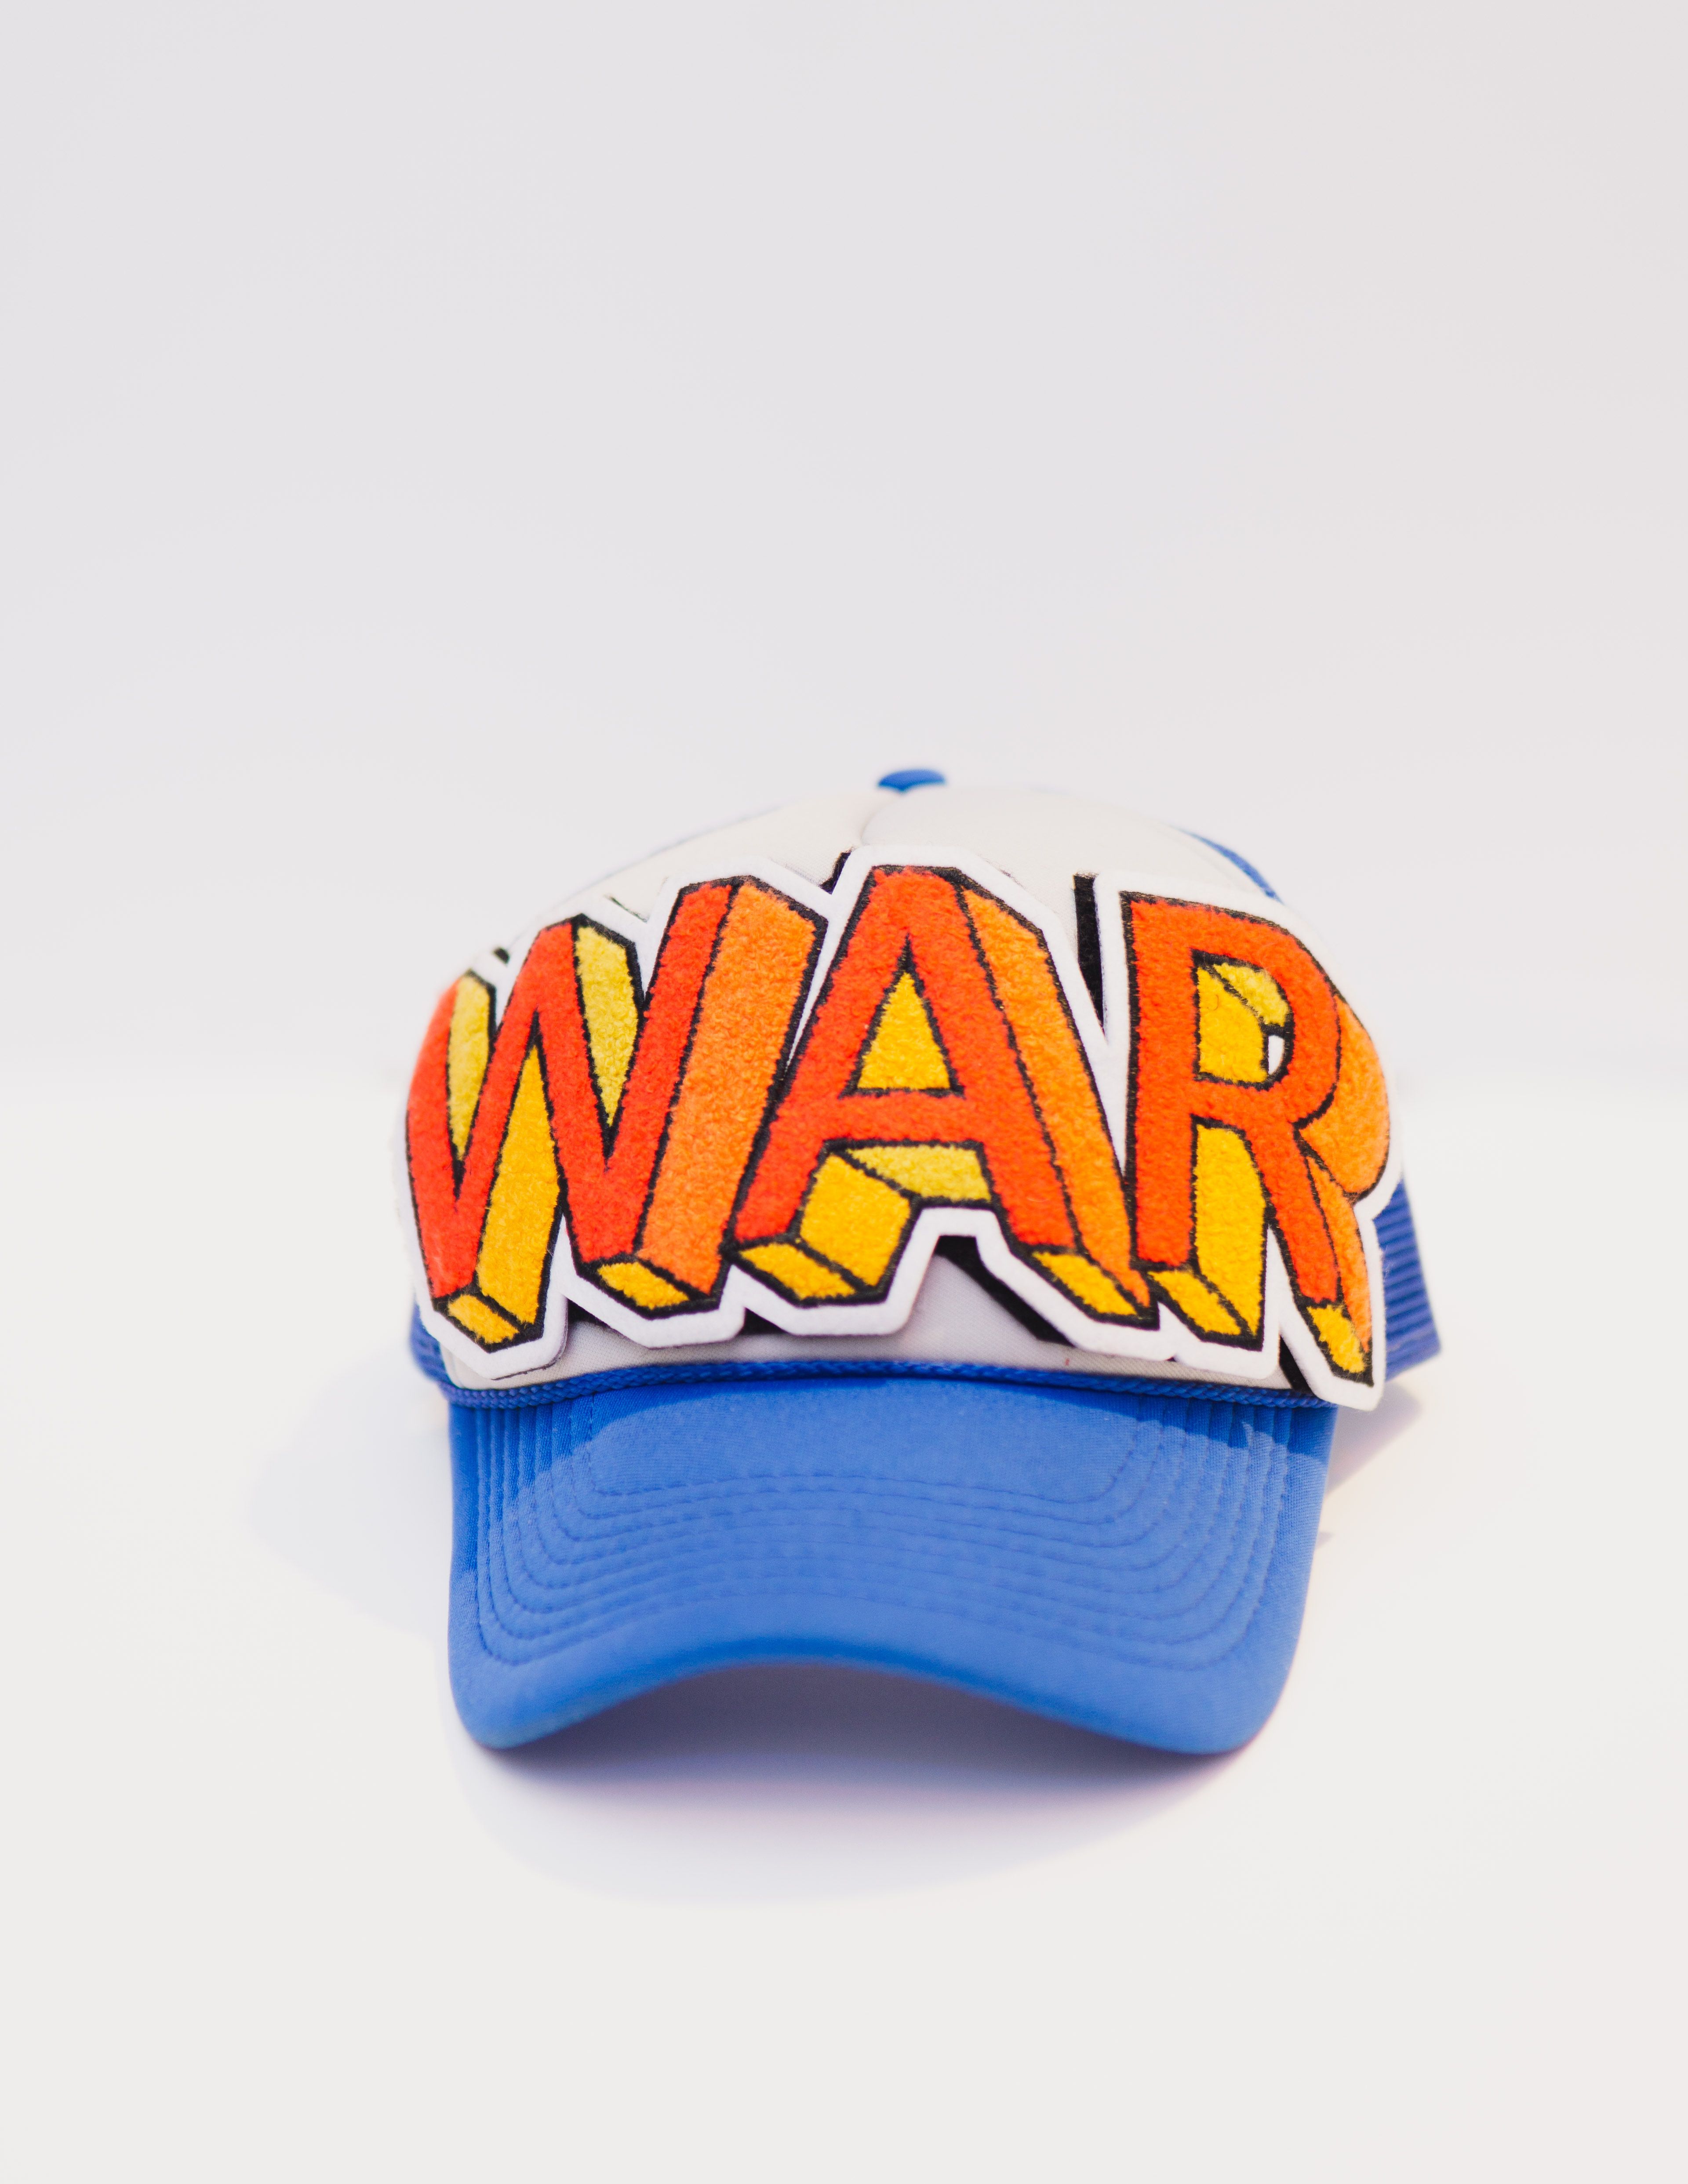 A Universe WAR Modular Hat by Aaron Ramey | Basic.Space